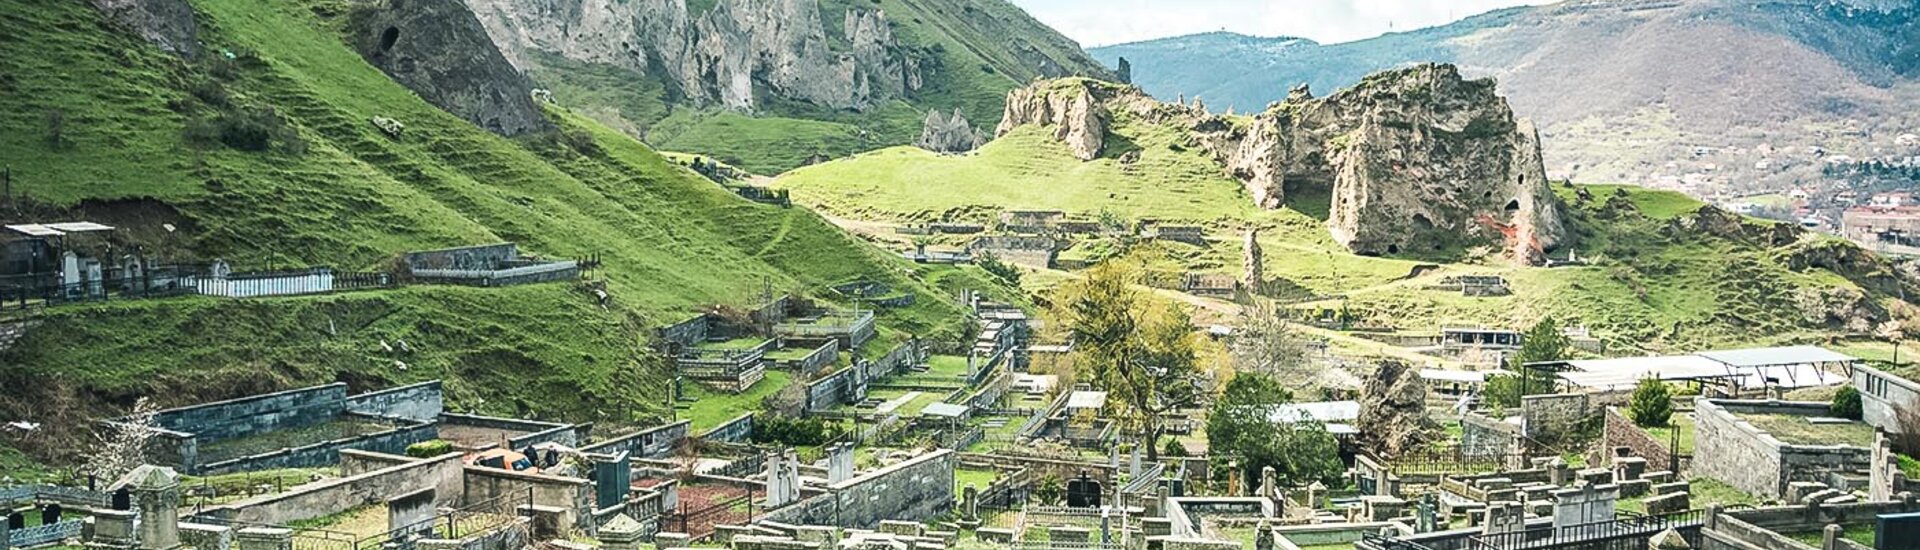 Ruinen in Goris, Armenien